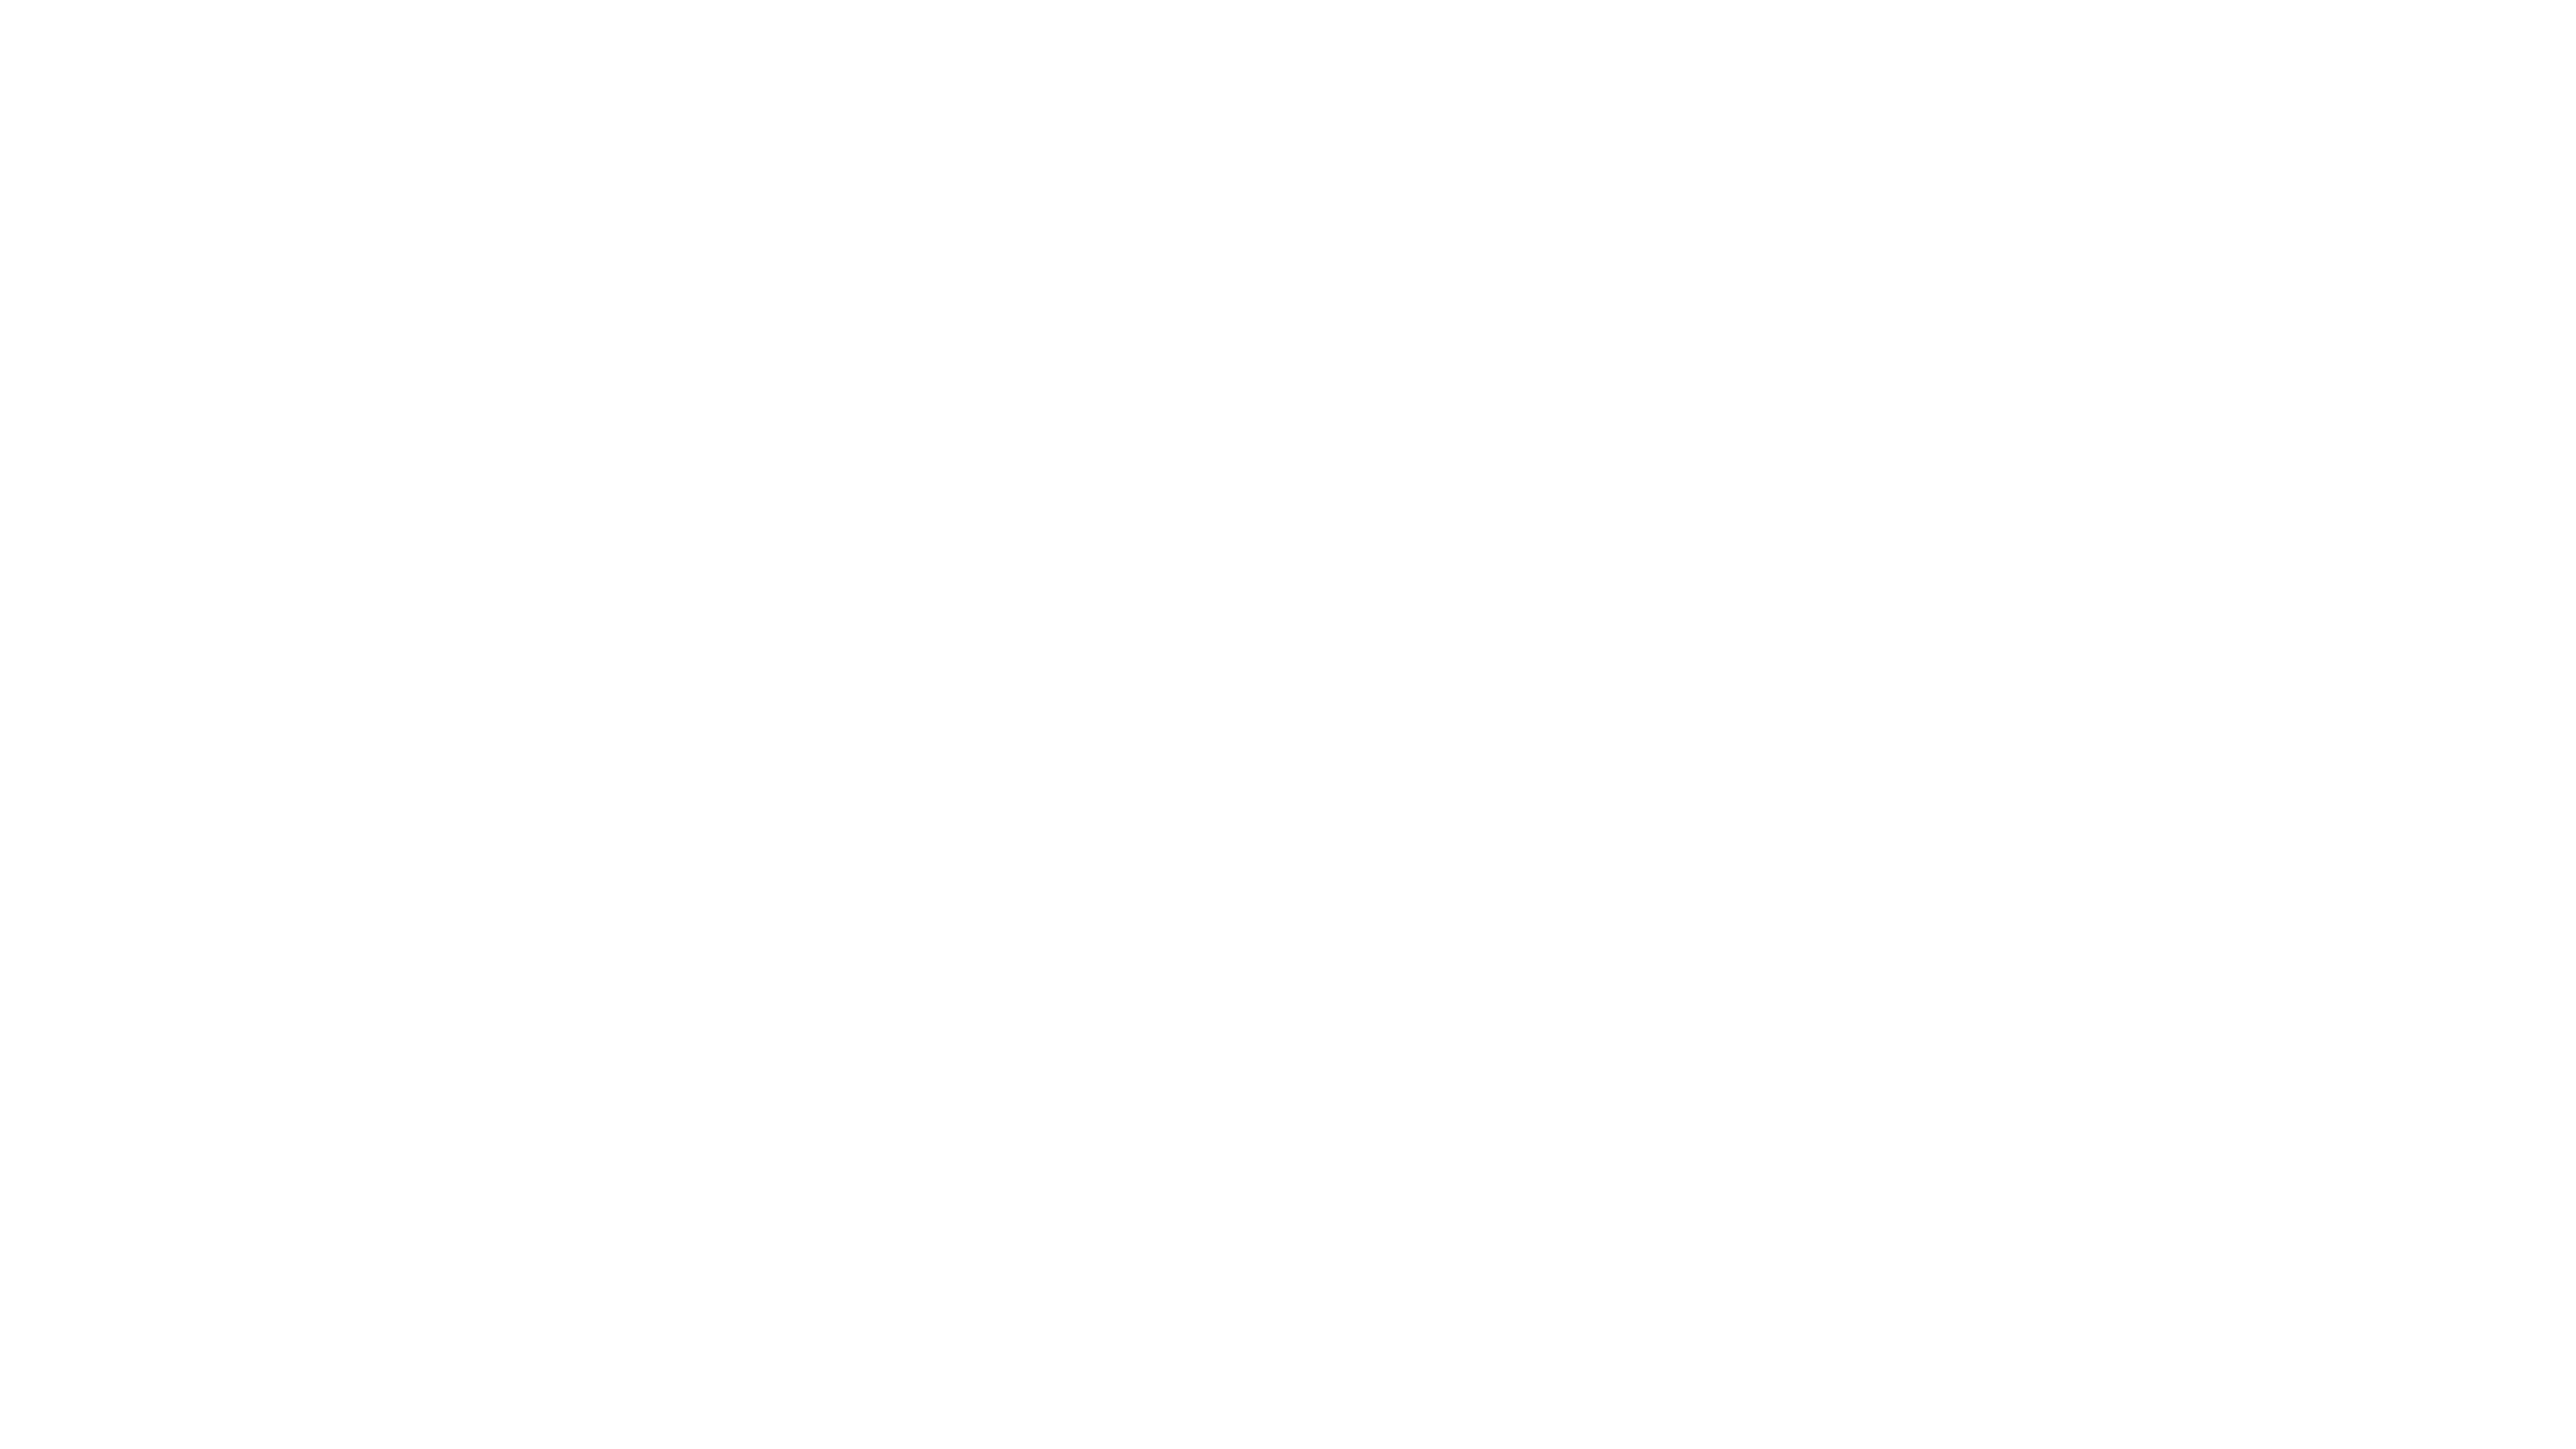 Hernshead Group